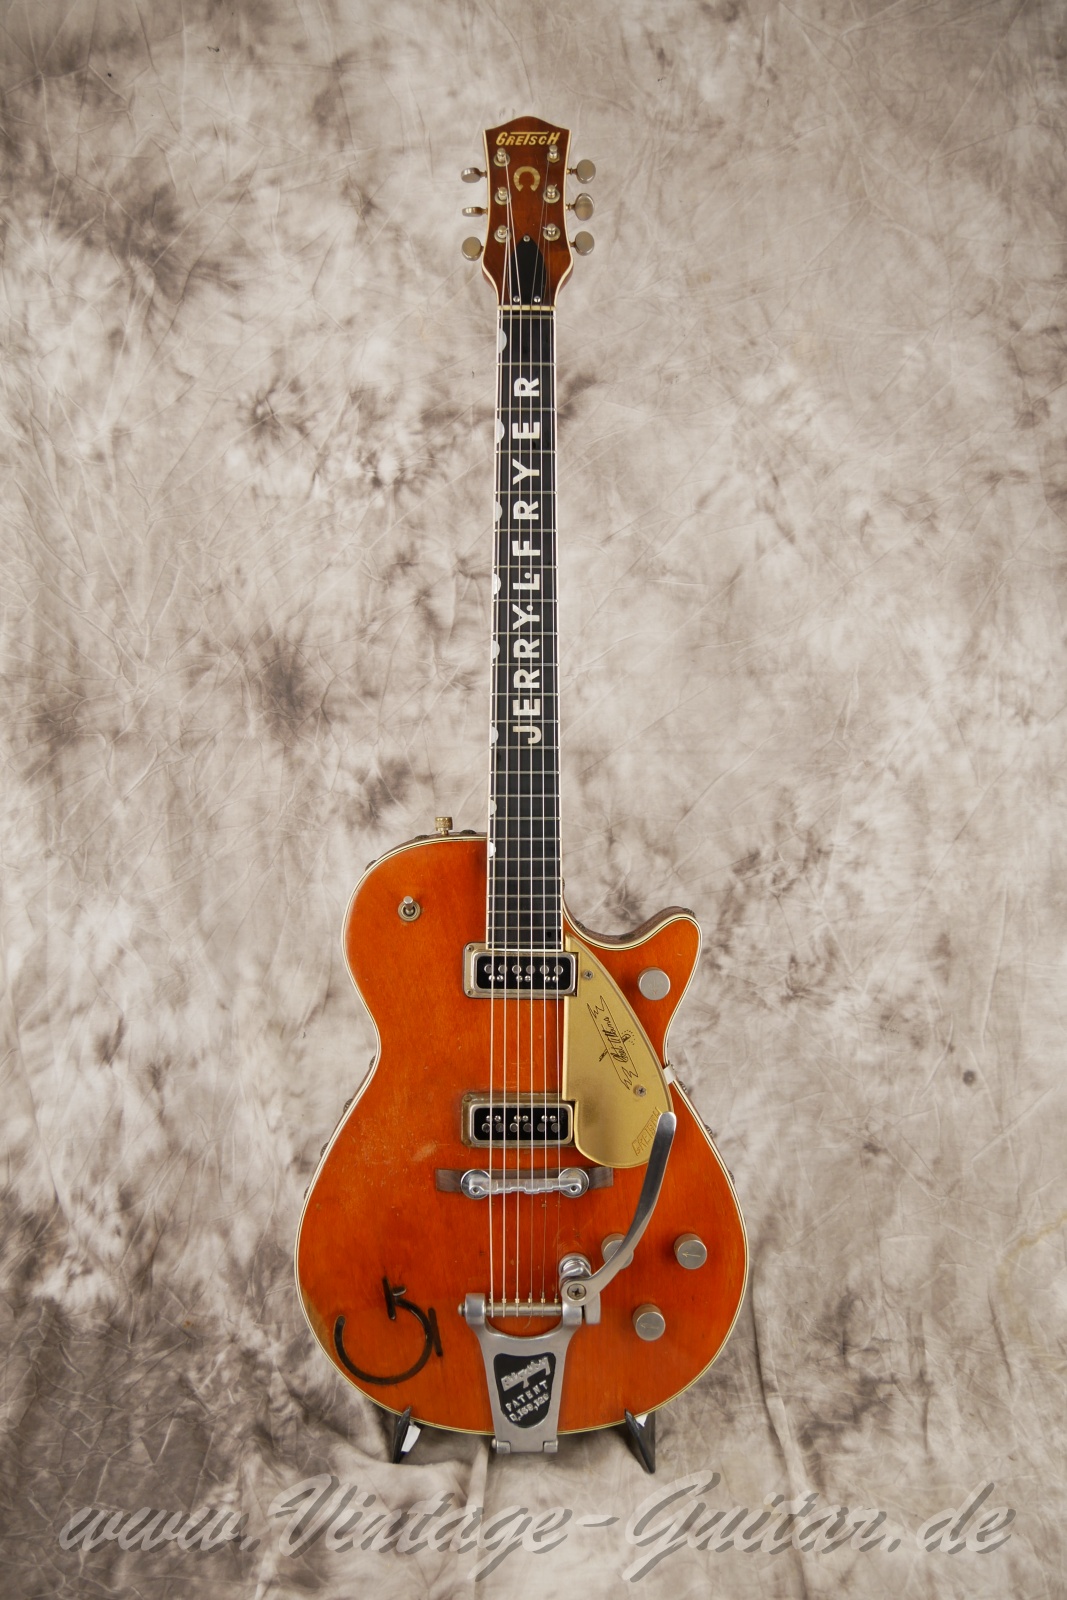 Gretsch-6121-Chet-Atkins-G-brand-1956-brown-mahagony-orange-finish-001.jpg